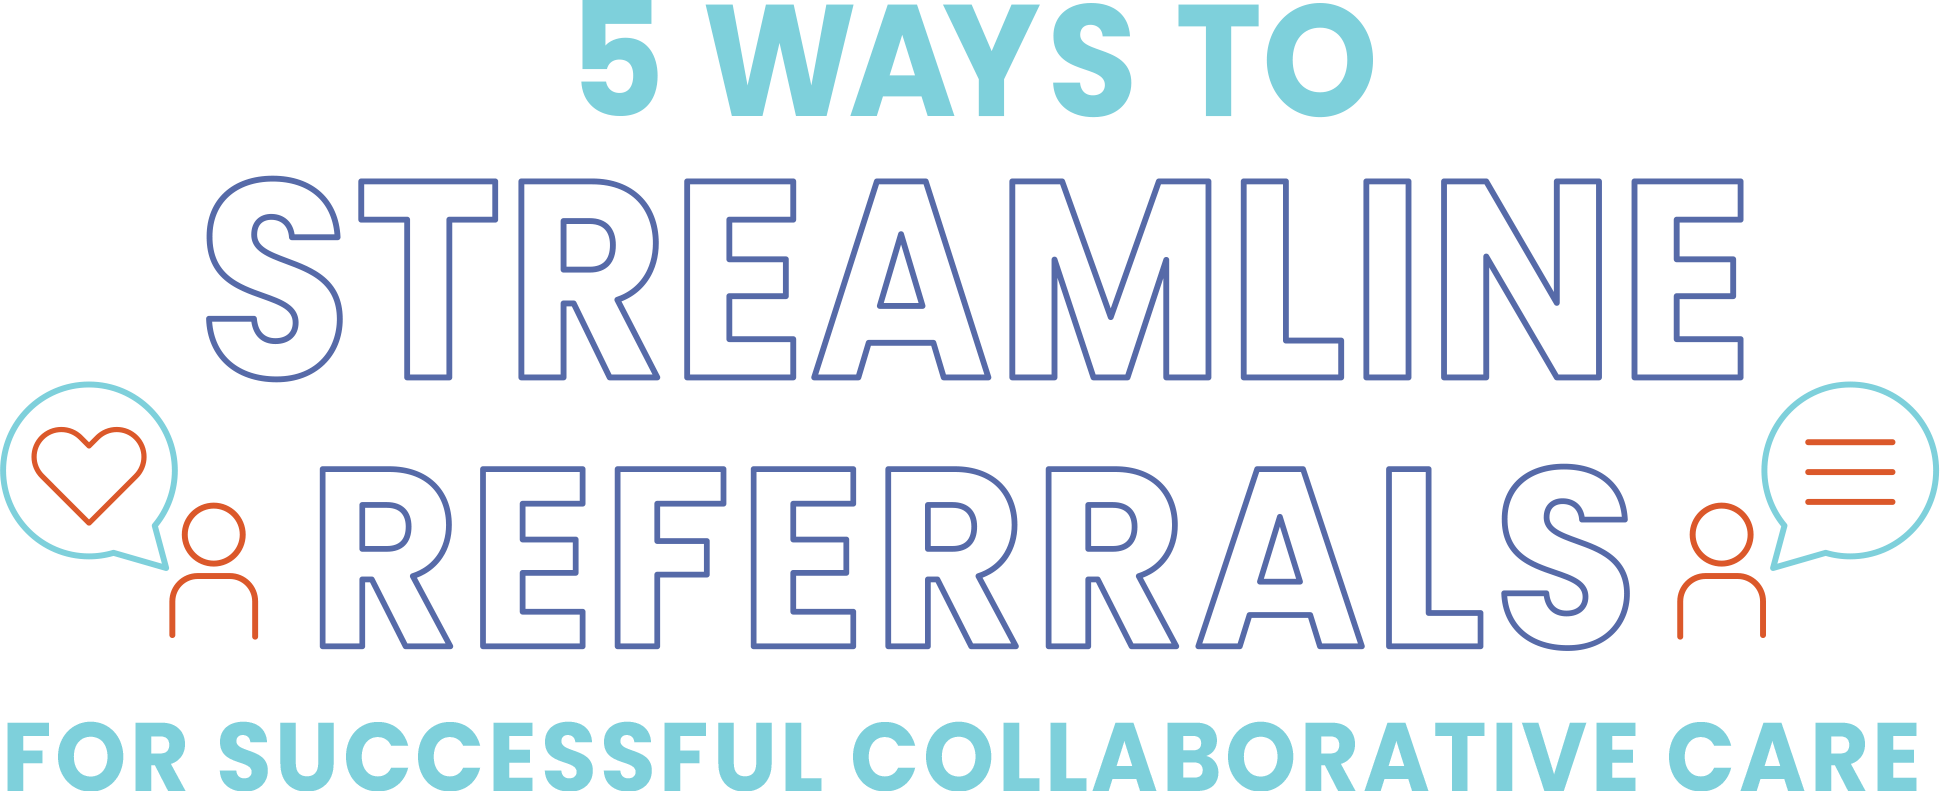 5 Ways to Streamline Referrals for Successful Collaborative Care